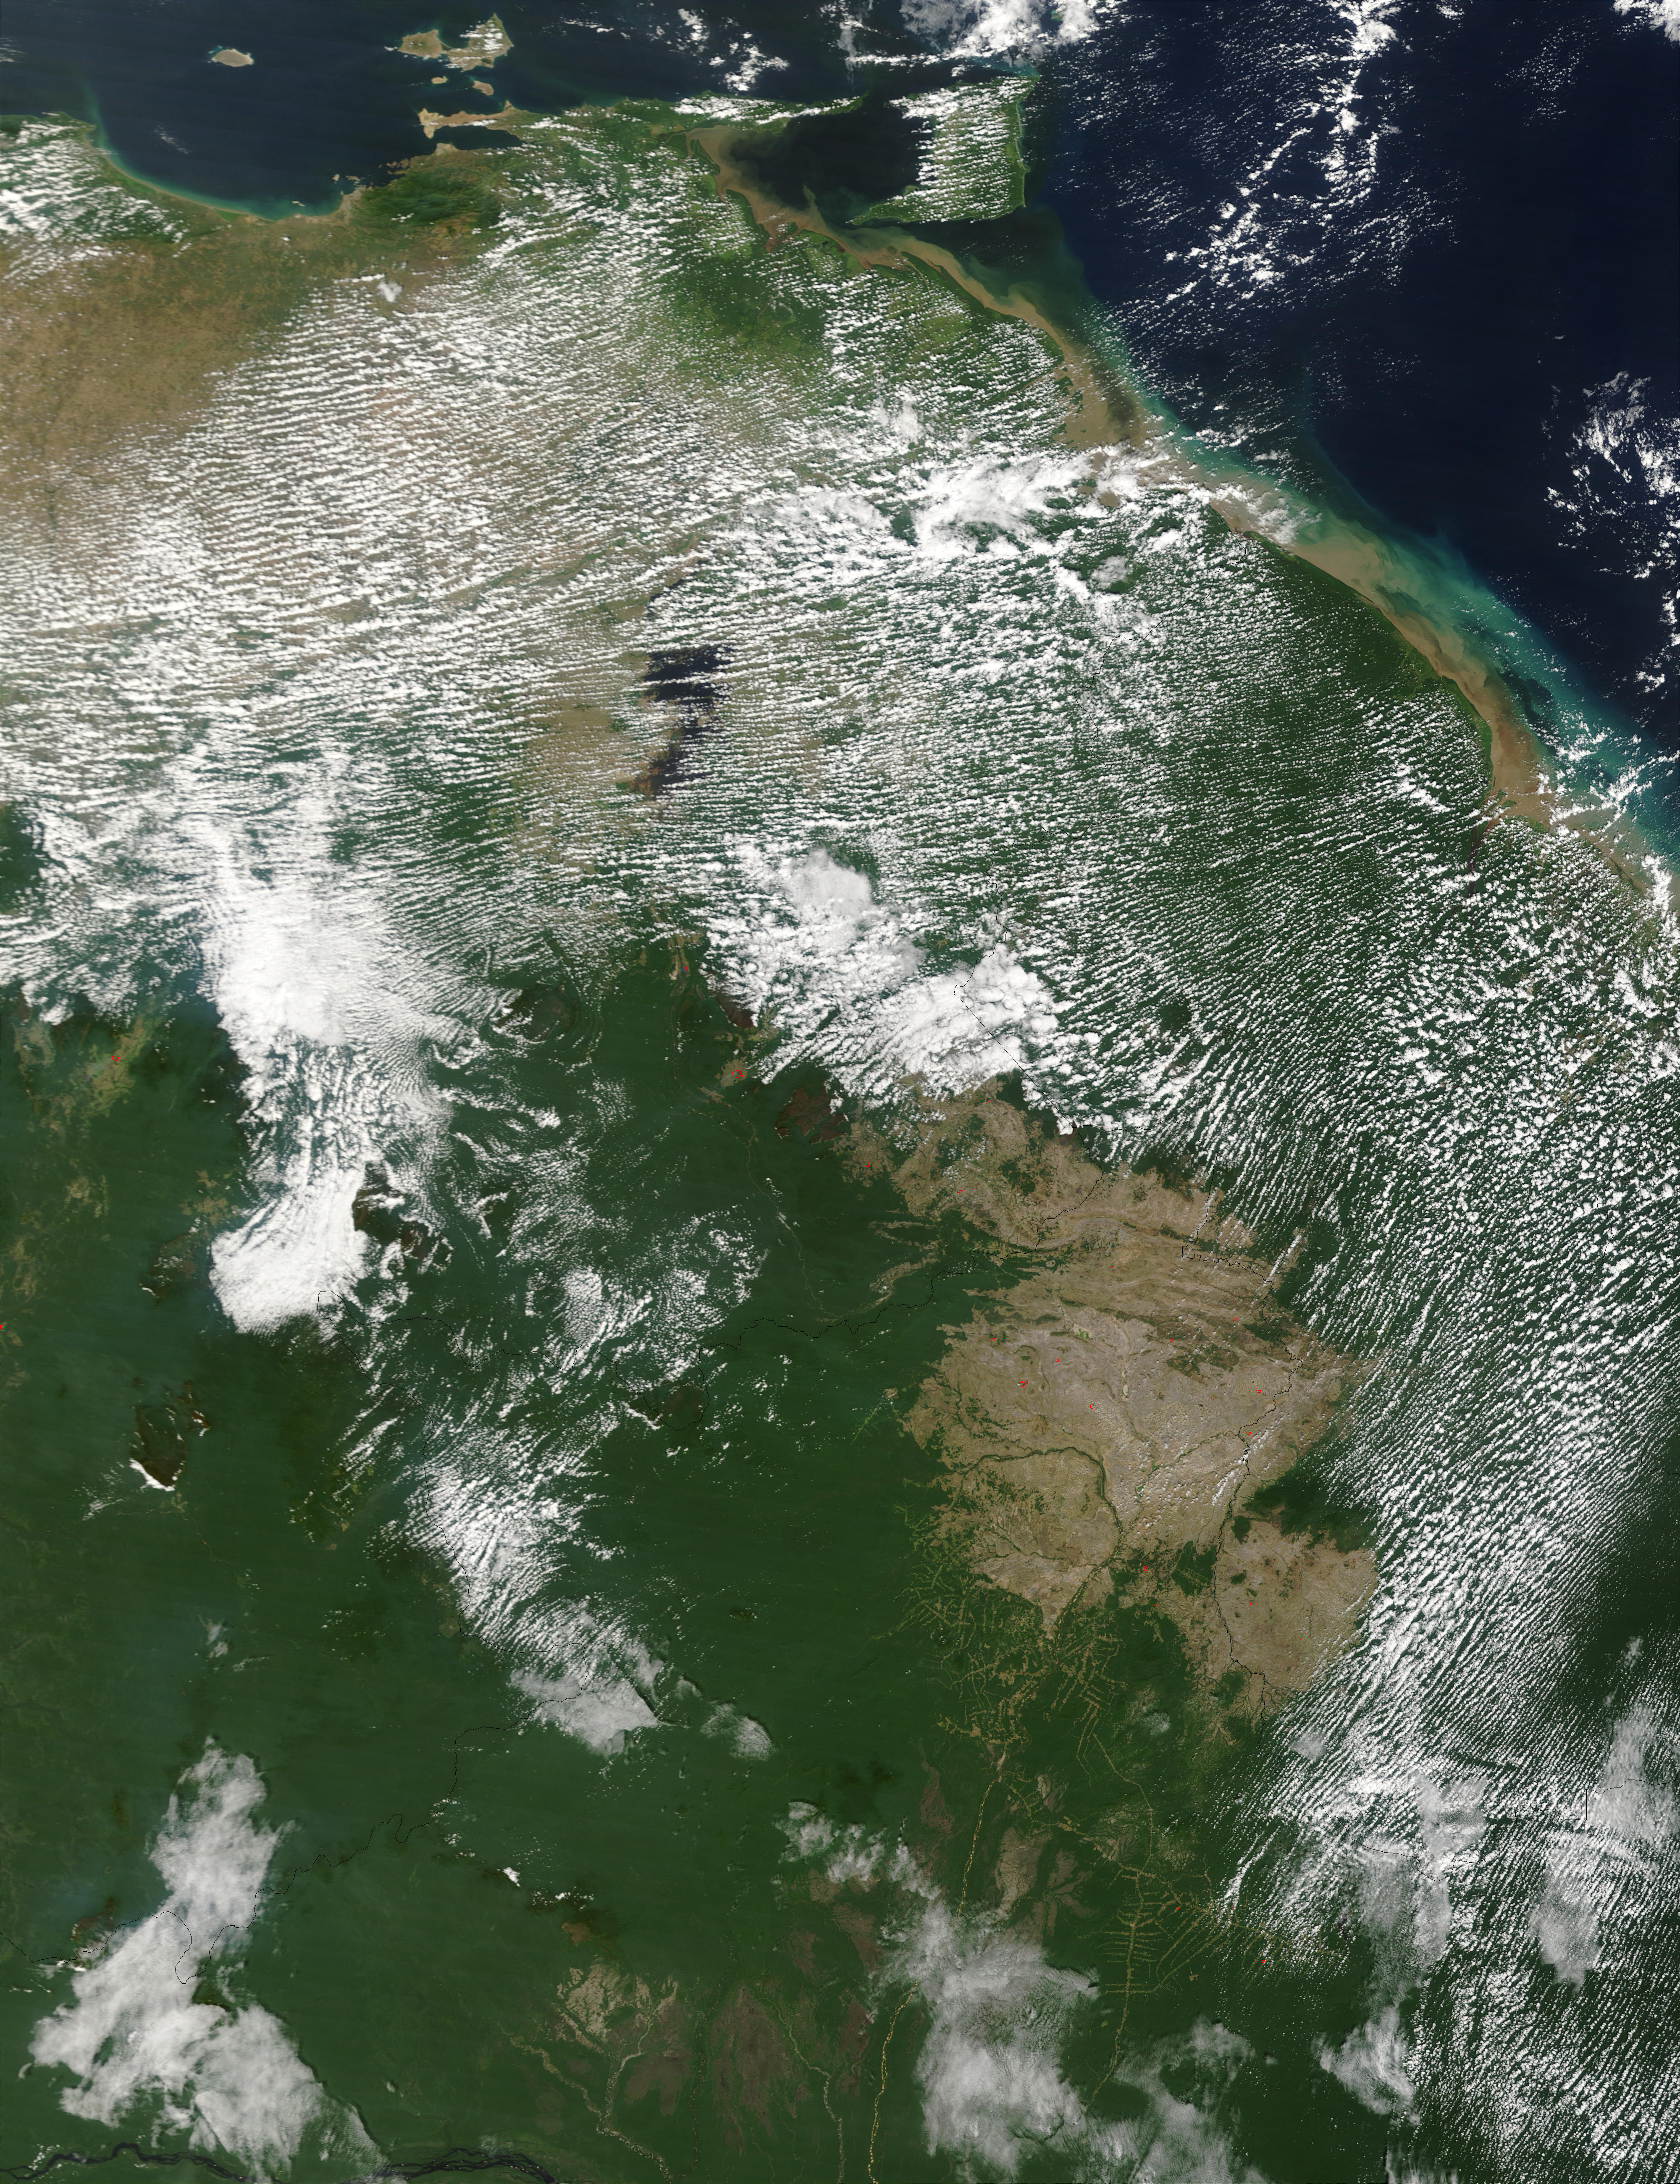 Fires in Venezuela, Guyana, and Brazil